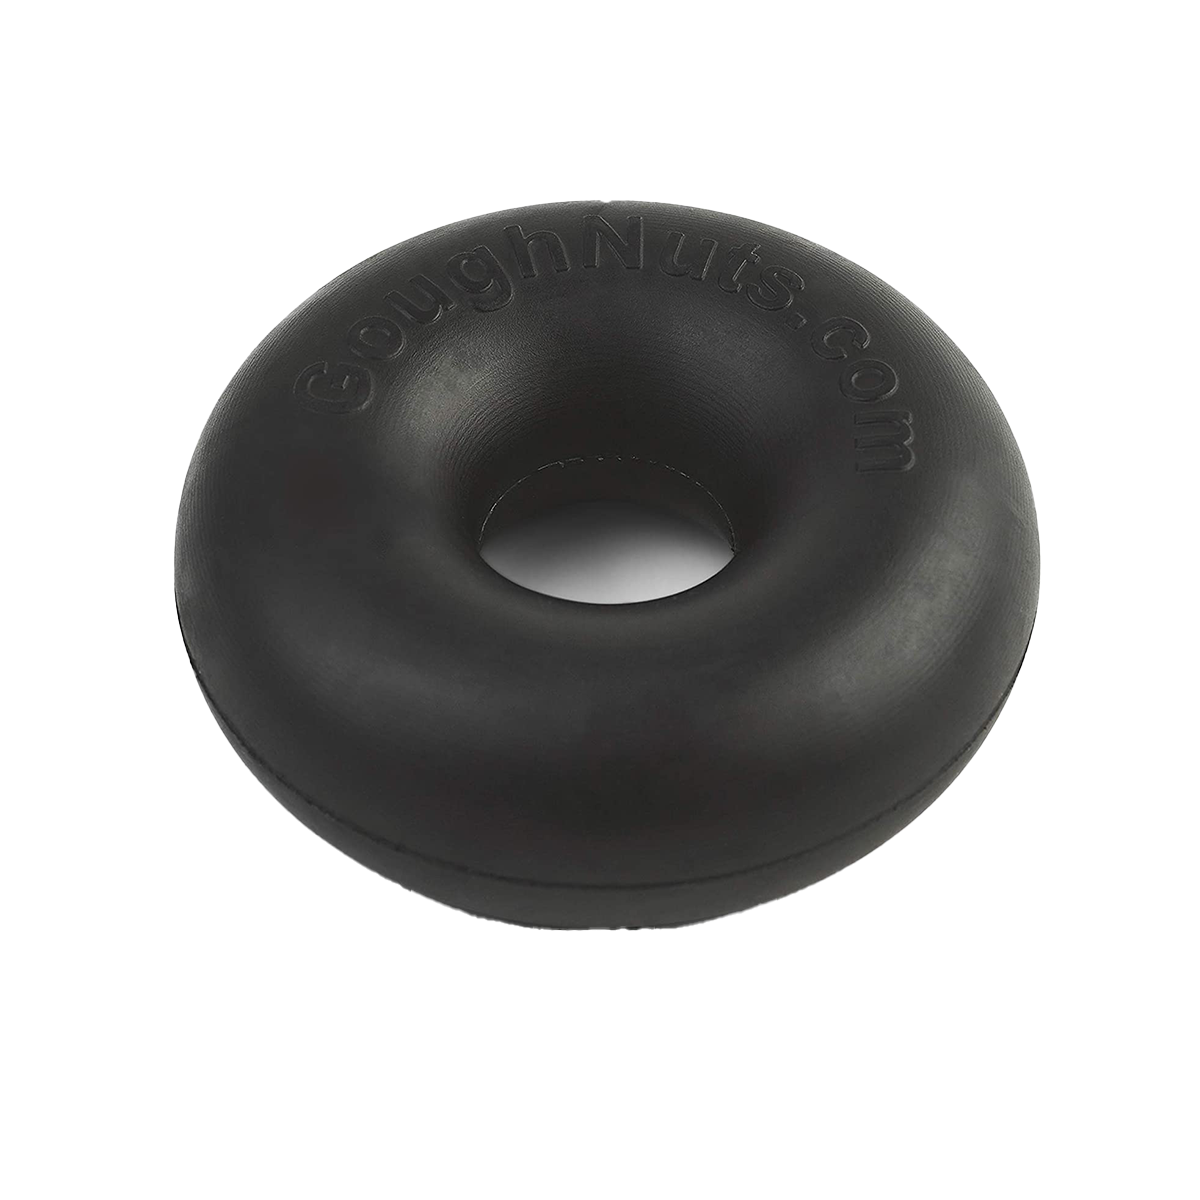 Goughnuts Ring .75 - Black